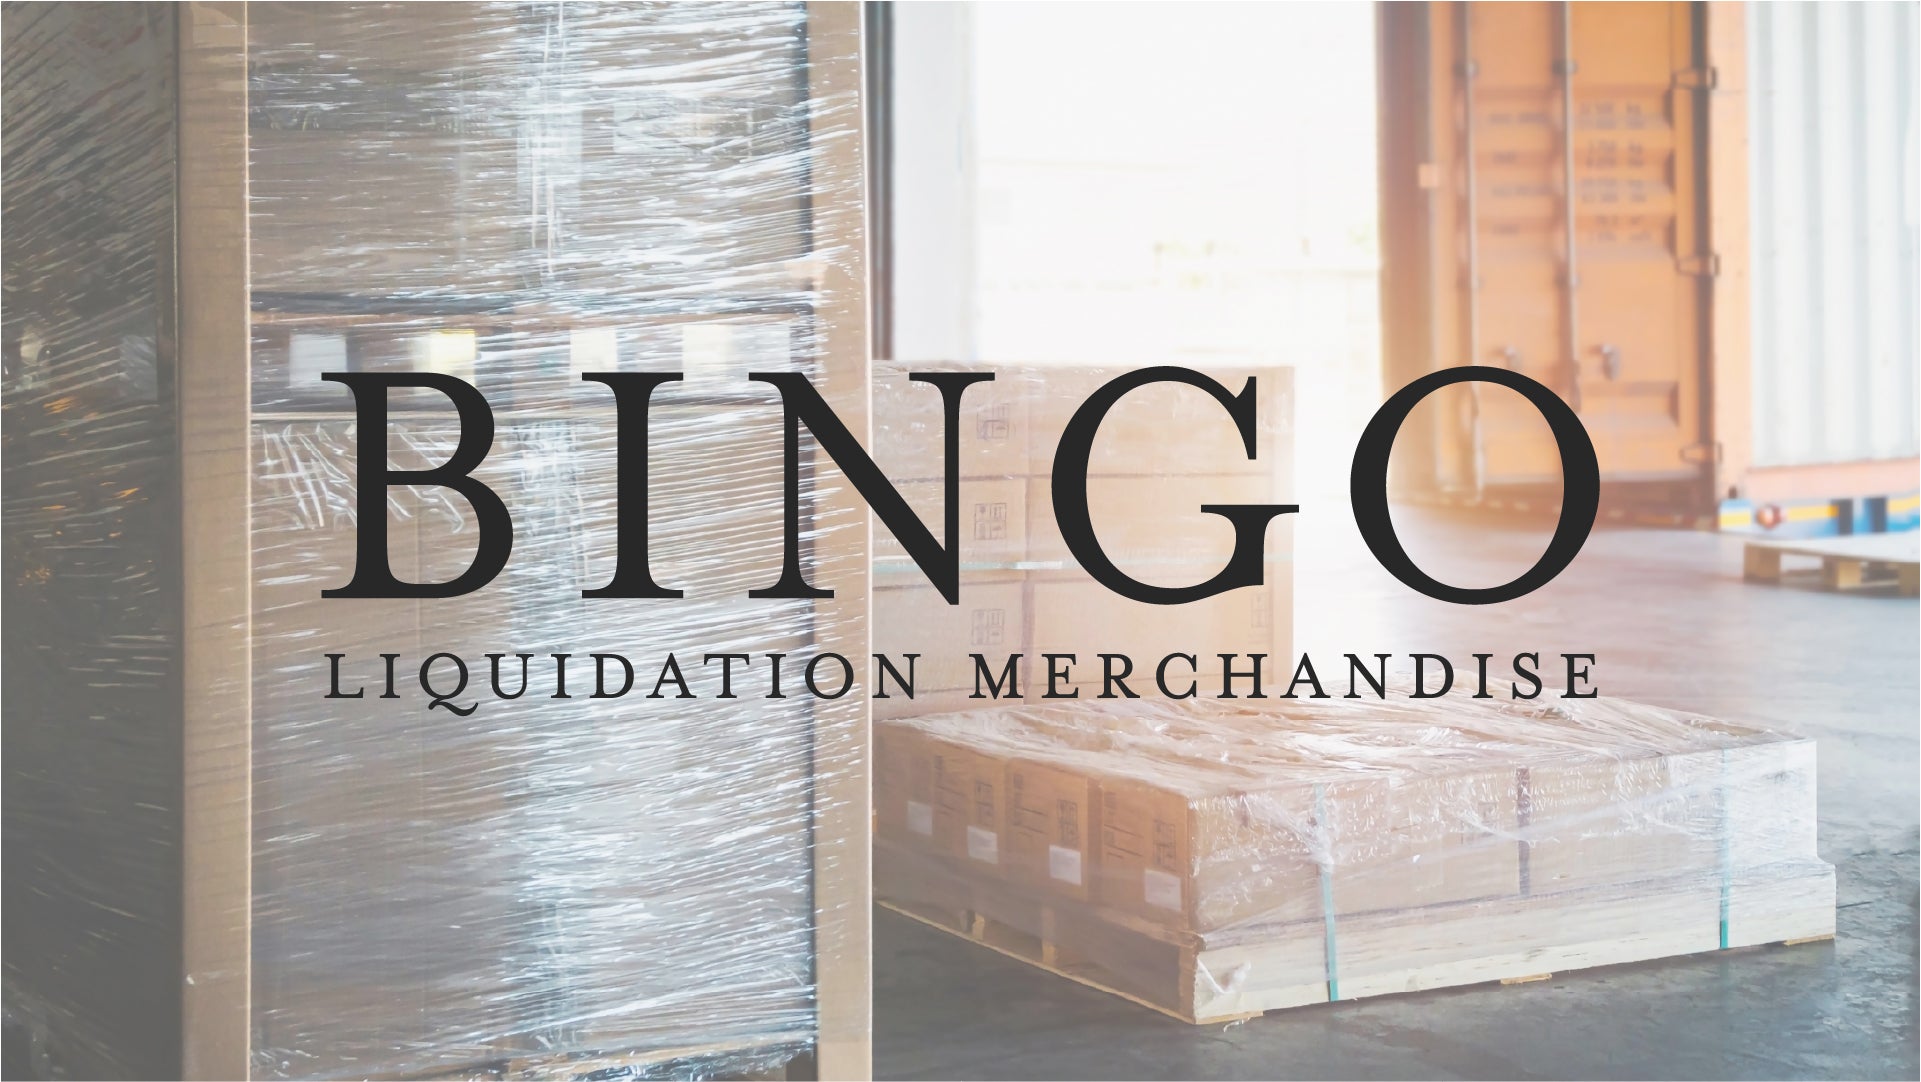 Bingo liquidation merchandise